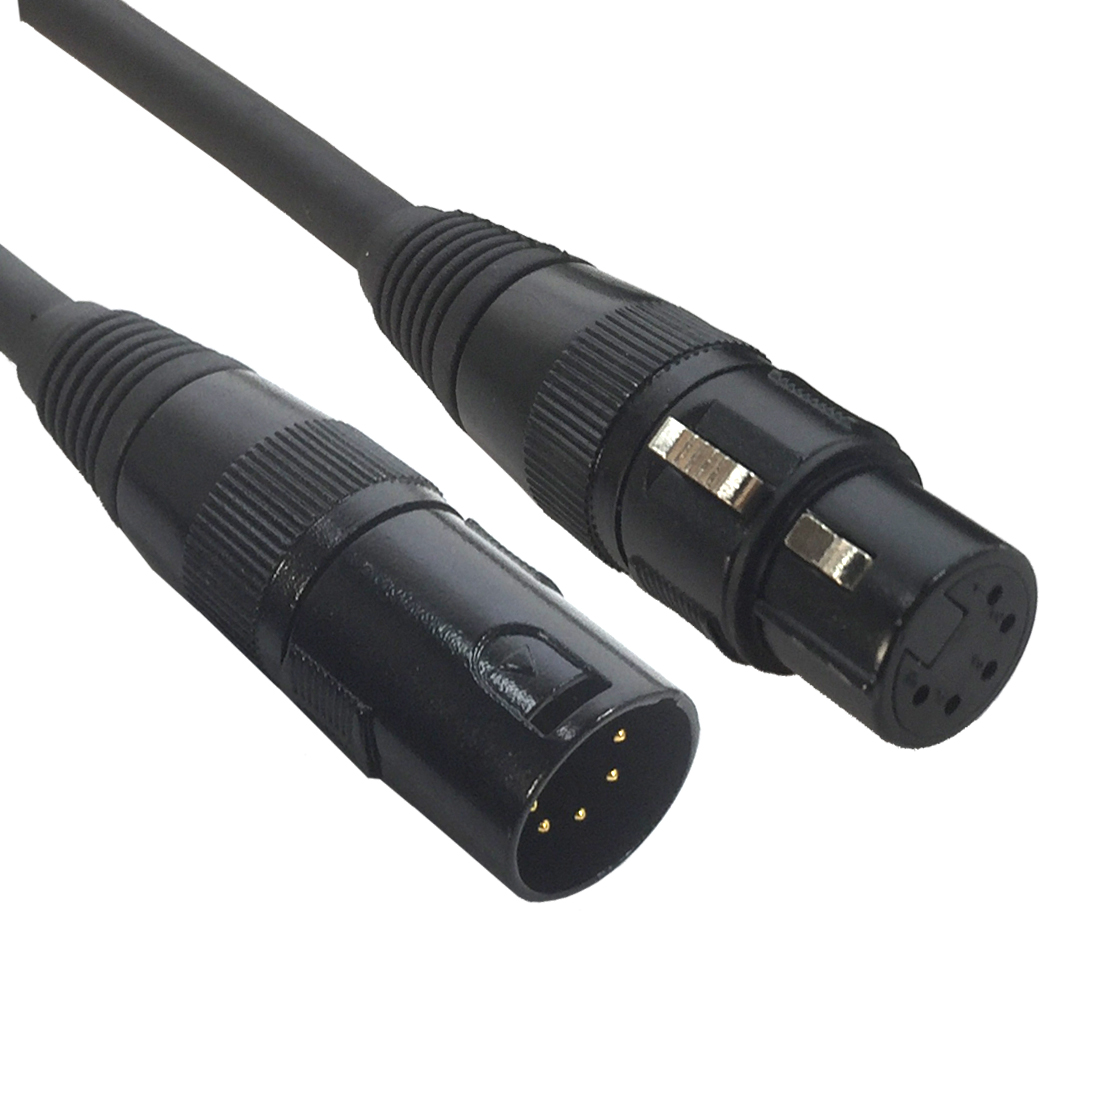 Accu Cable AC-DMX5/5 - 5 p. XLR m/5 p. XLR f 5m DMX